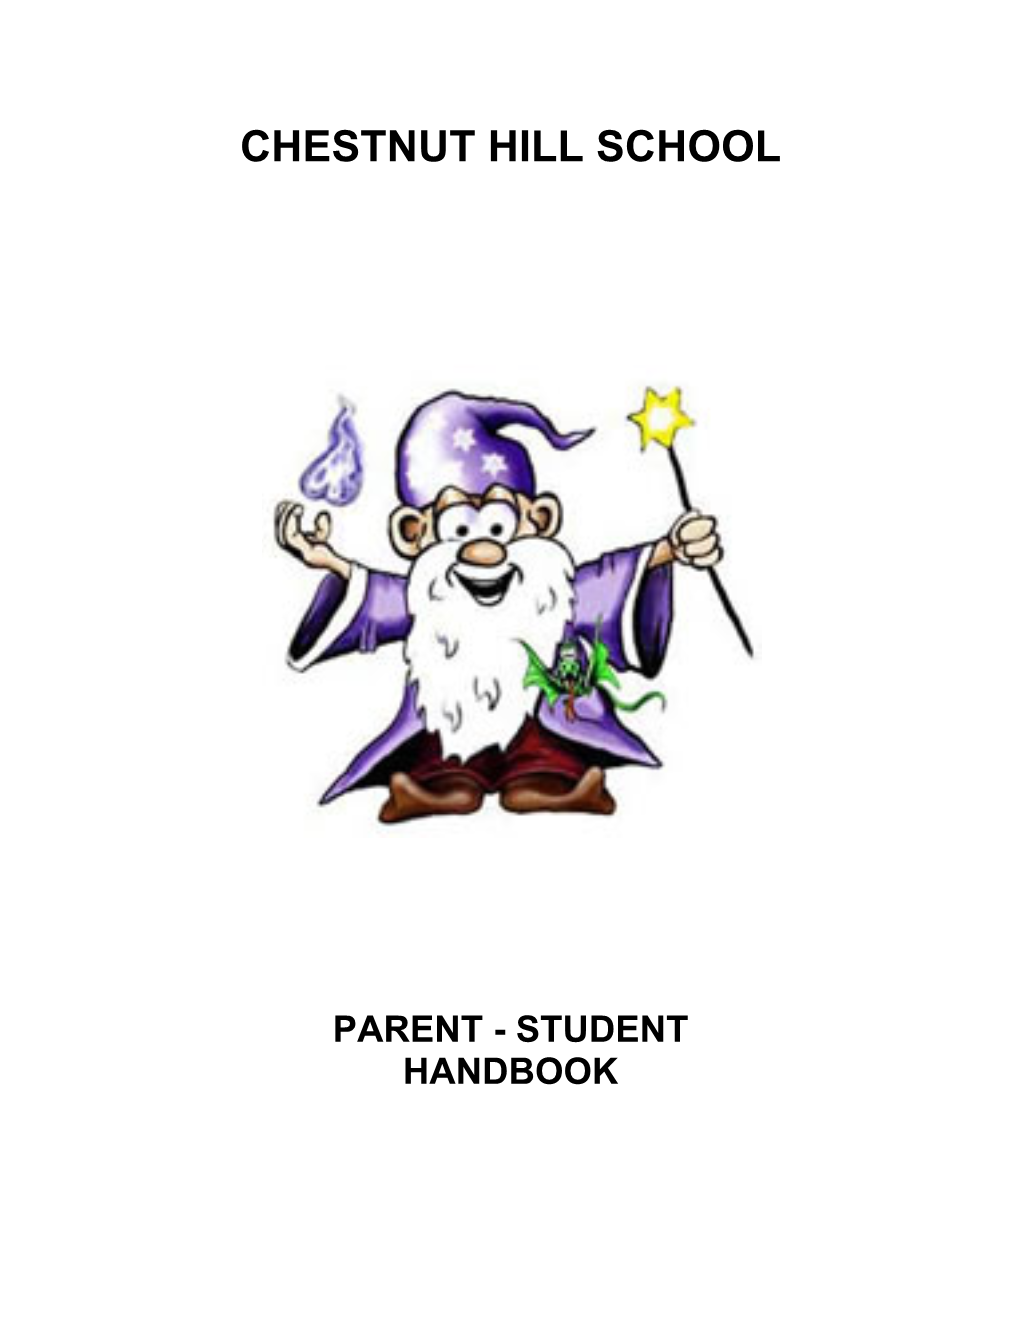 Chestnut Hill School